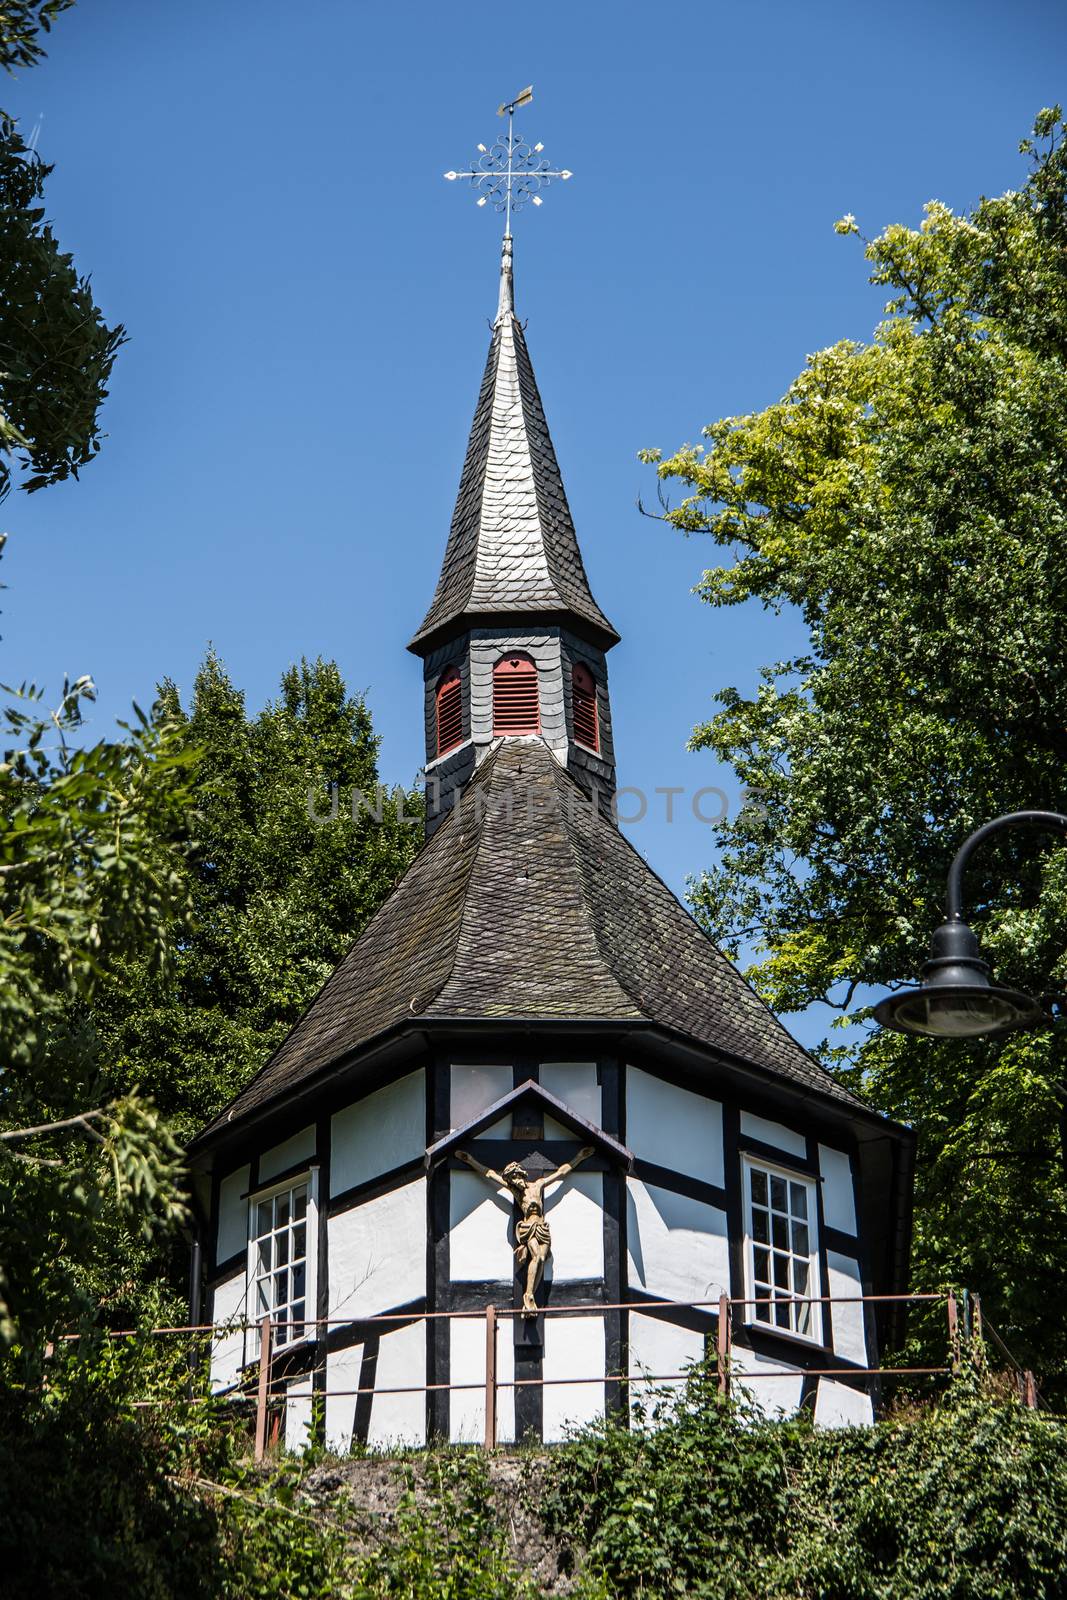 Half-timbered Heisterkapelle in Wissen by Dr-Lange